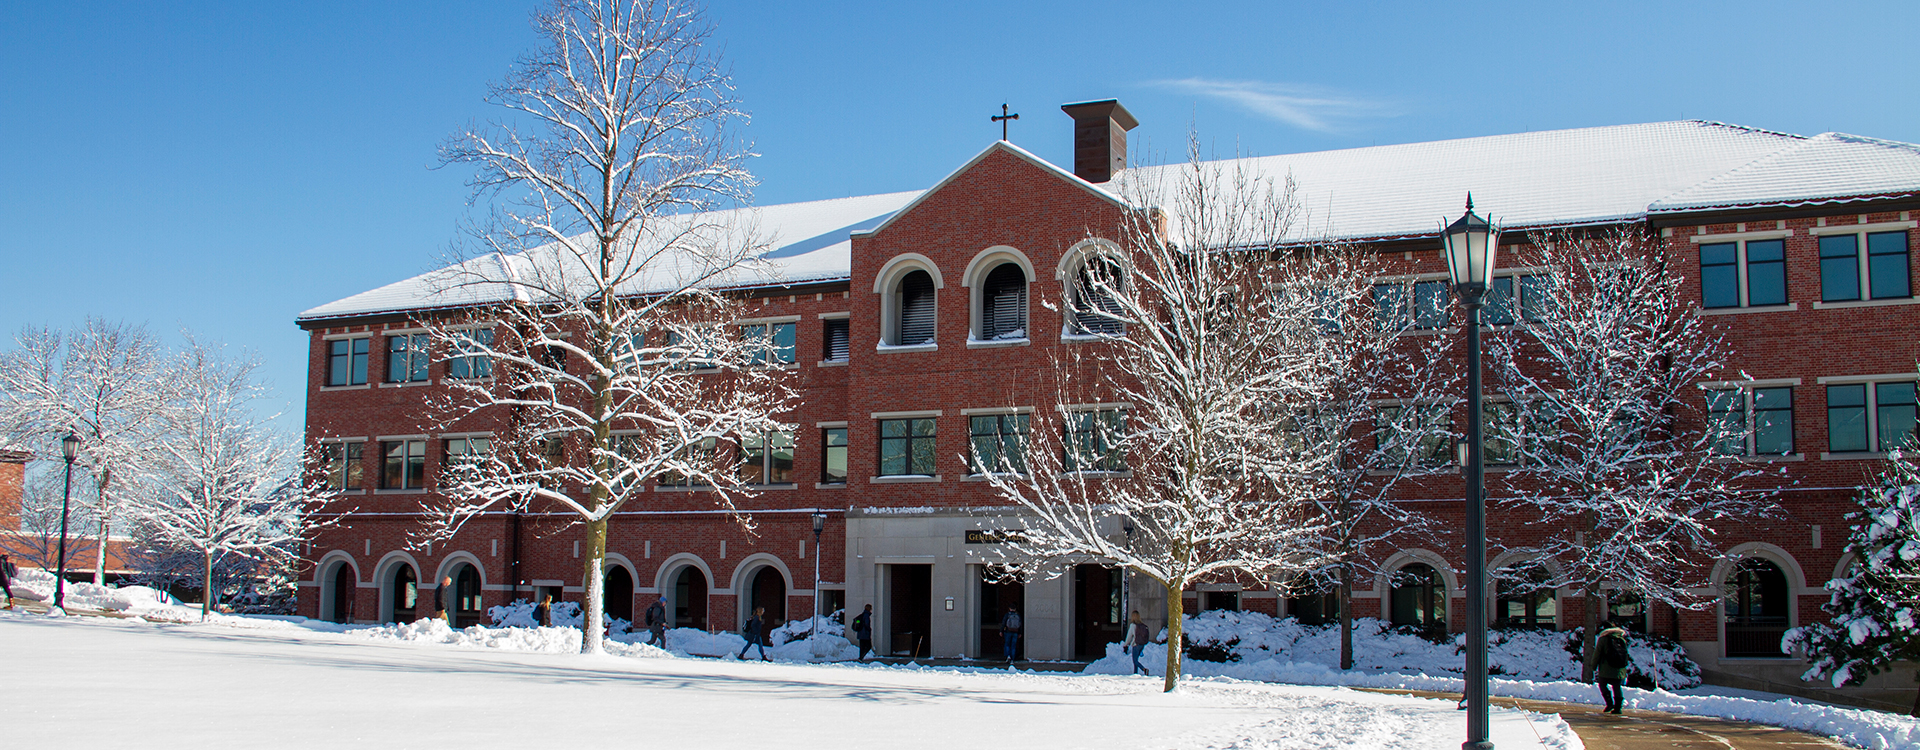 Generac Hall in winter